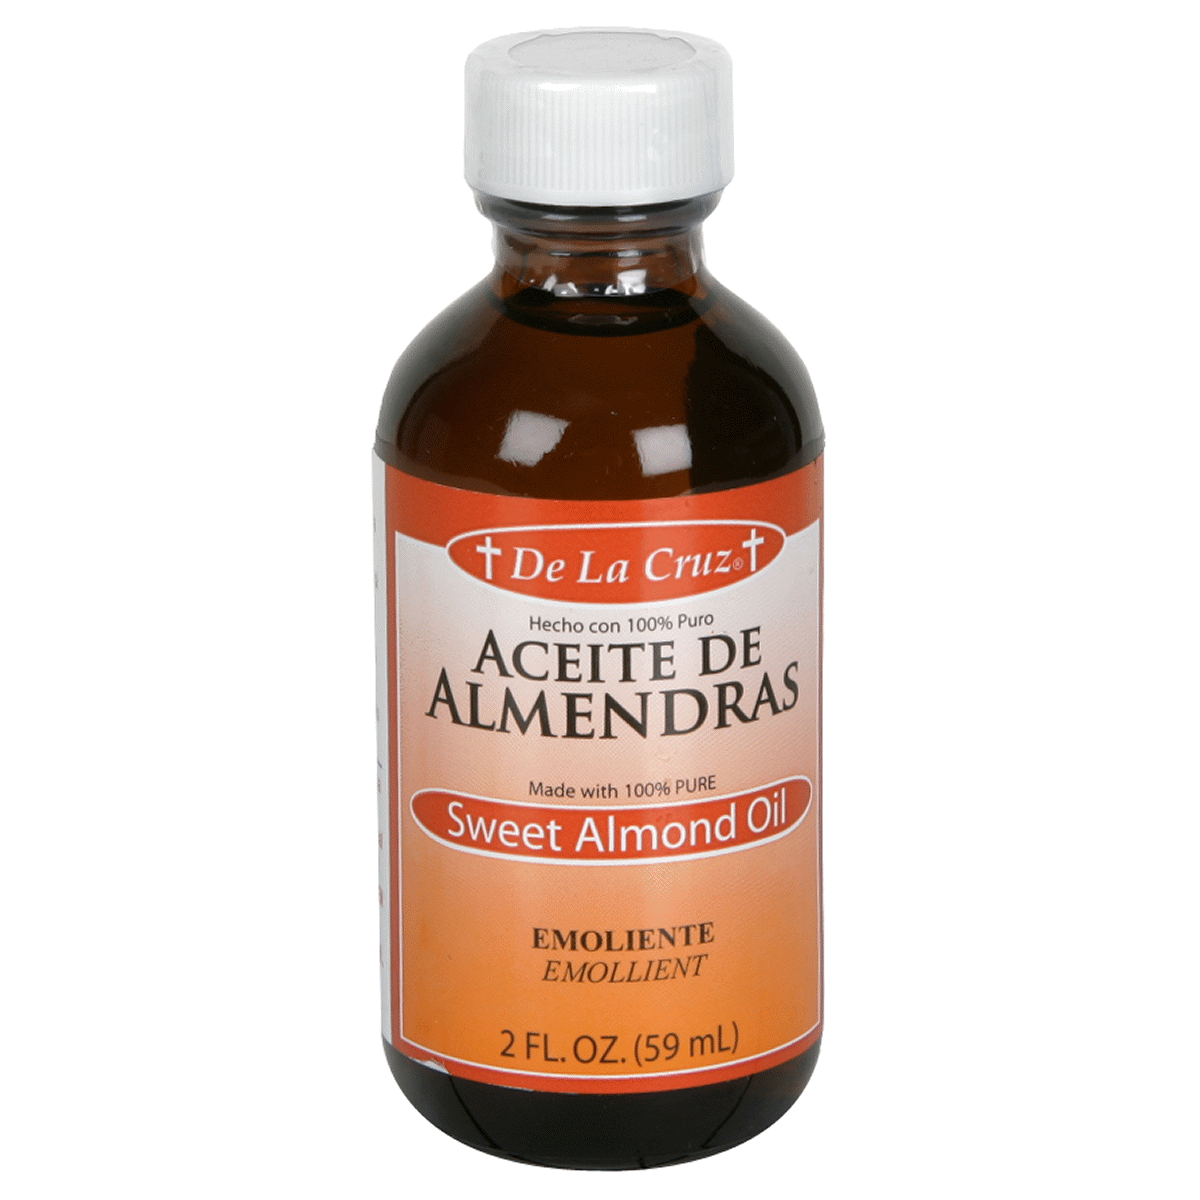 slide 1 of 1, De la Cruz Aceite de Almenderas Emollient Sweet Almond Oil, 2 fl oz